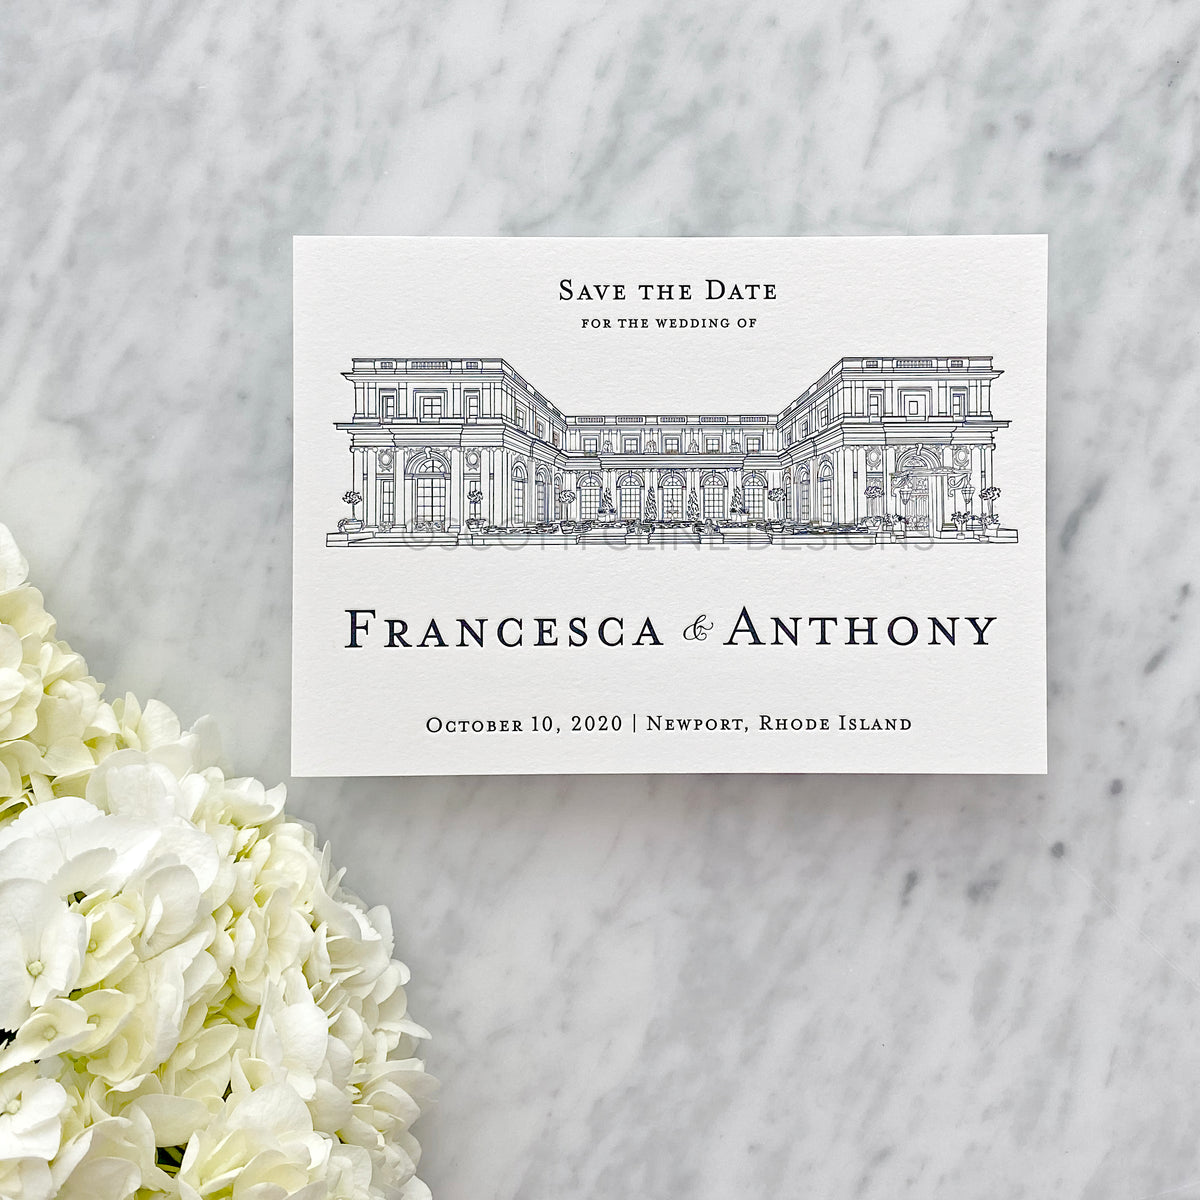 Letterpress Rosecliff Mansion Wedding Venue Save the Date by Scotti Cline Designs - Newport, Rhode Island